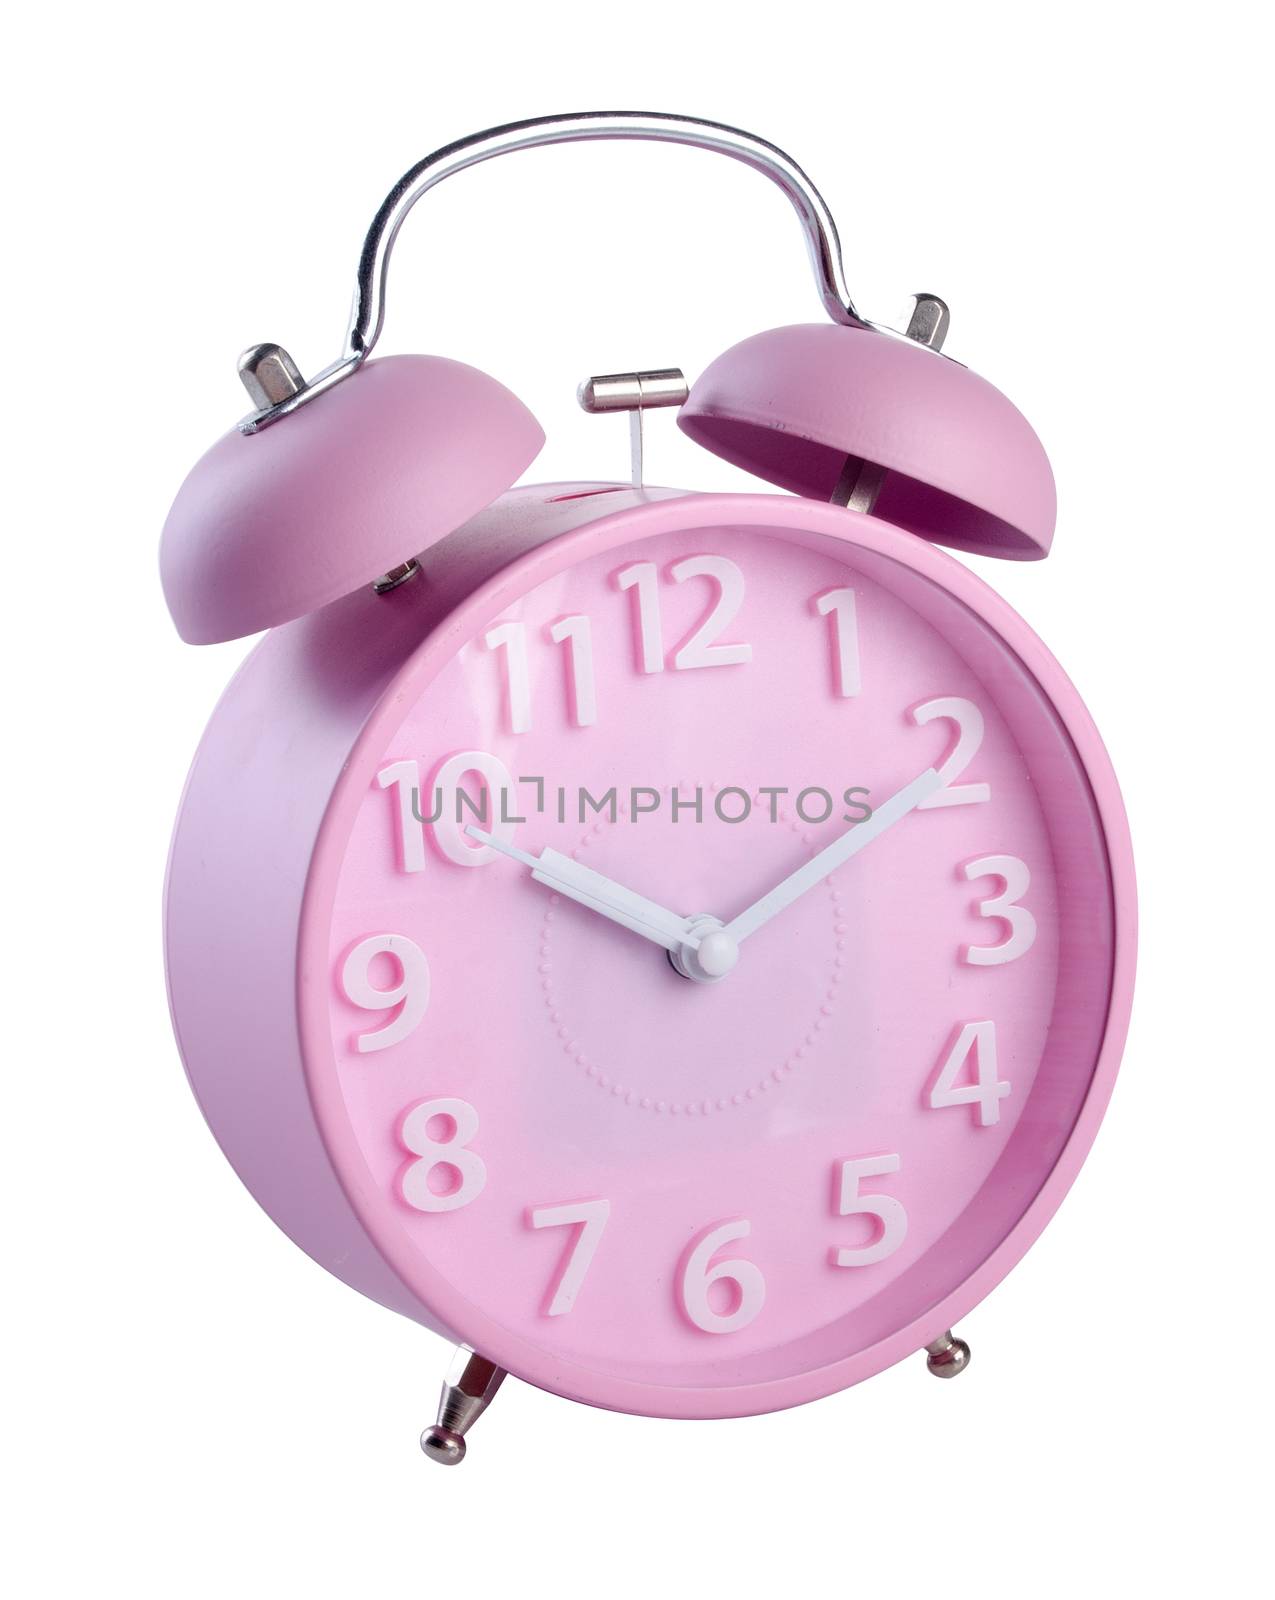 alarm clock. alarm clock on background. alarm clock on the backg by heinteh